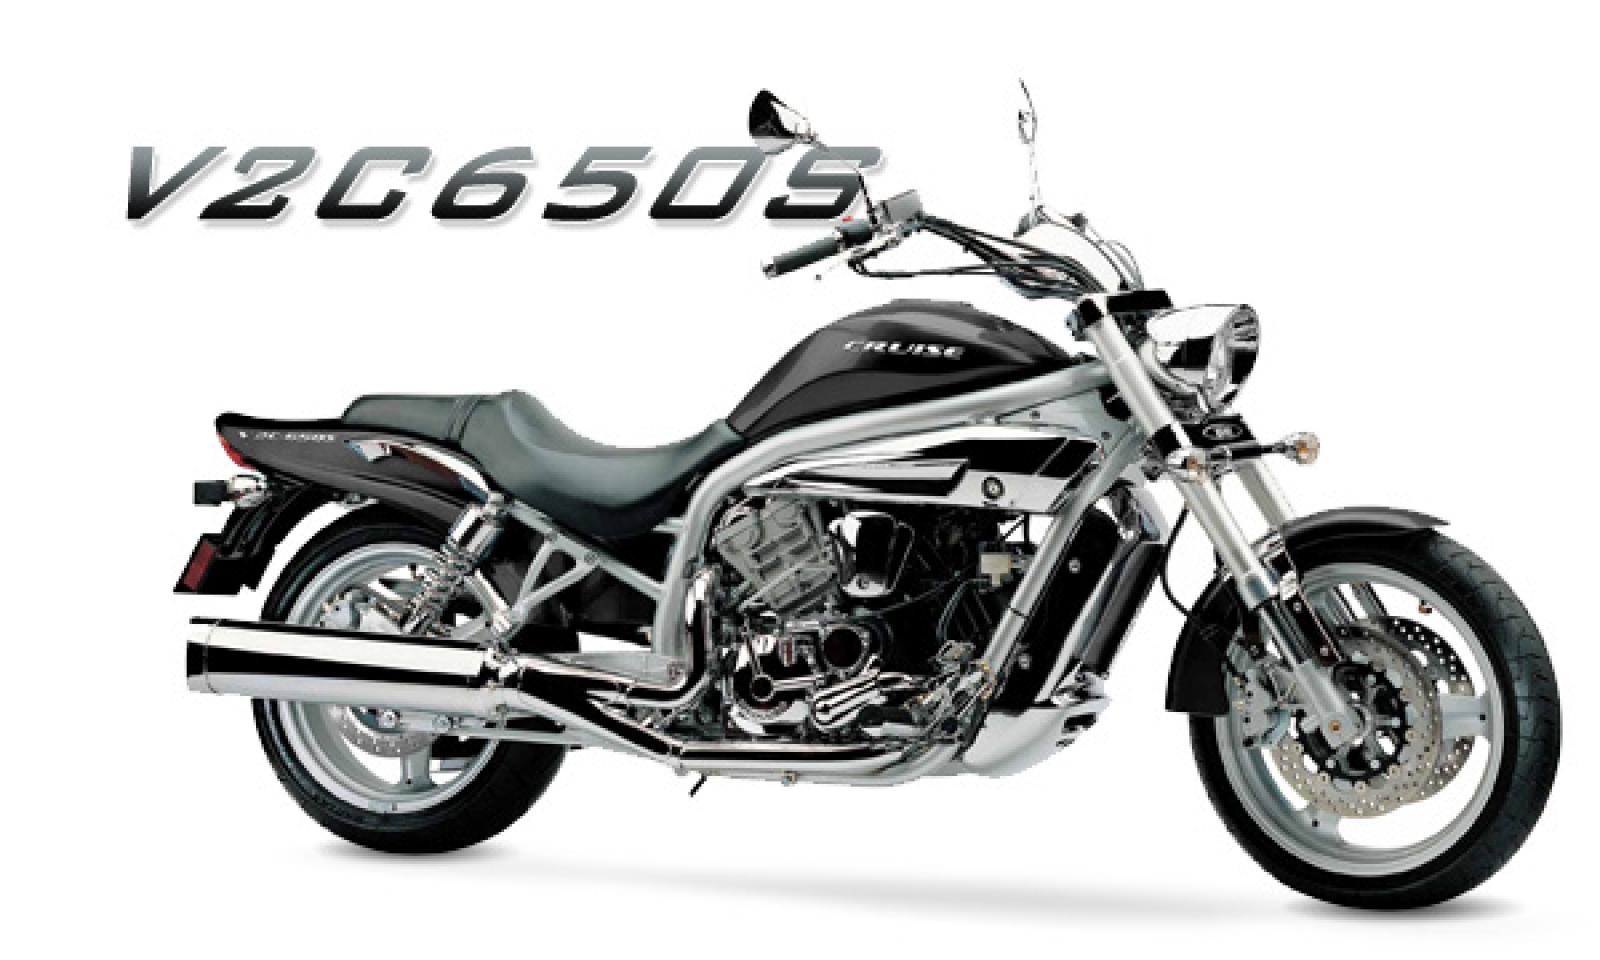 Сайт 650. Мотоцикла um v2c 650s. Мотоцикл Юнайтед Моторс v2c-650s 2009г.в. S650 slforza. Мотоцикл Юнайтед Моторс v2c-640s.